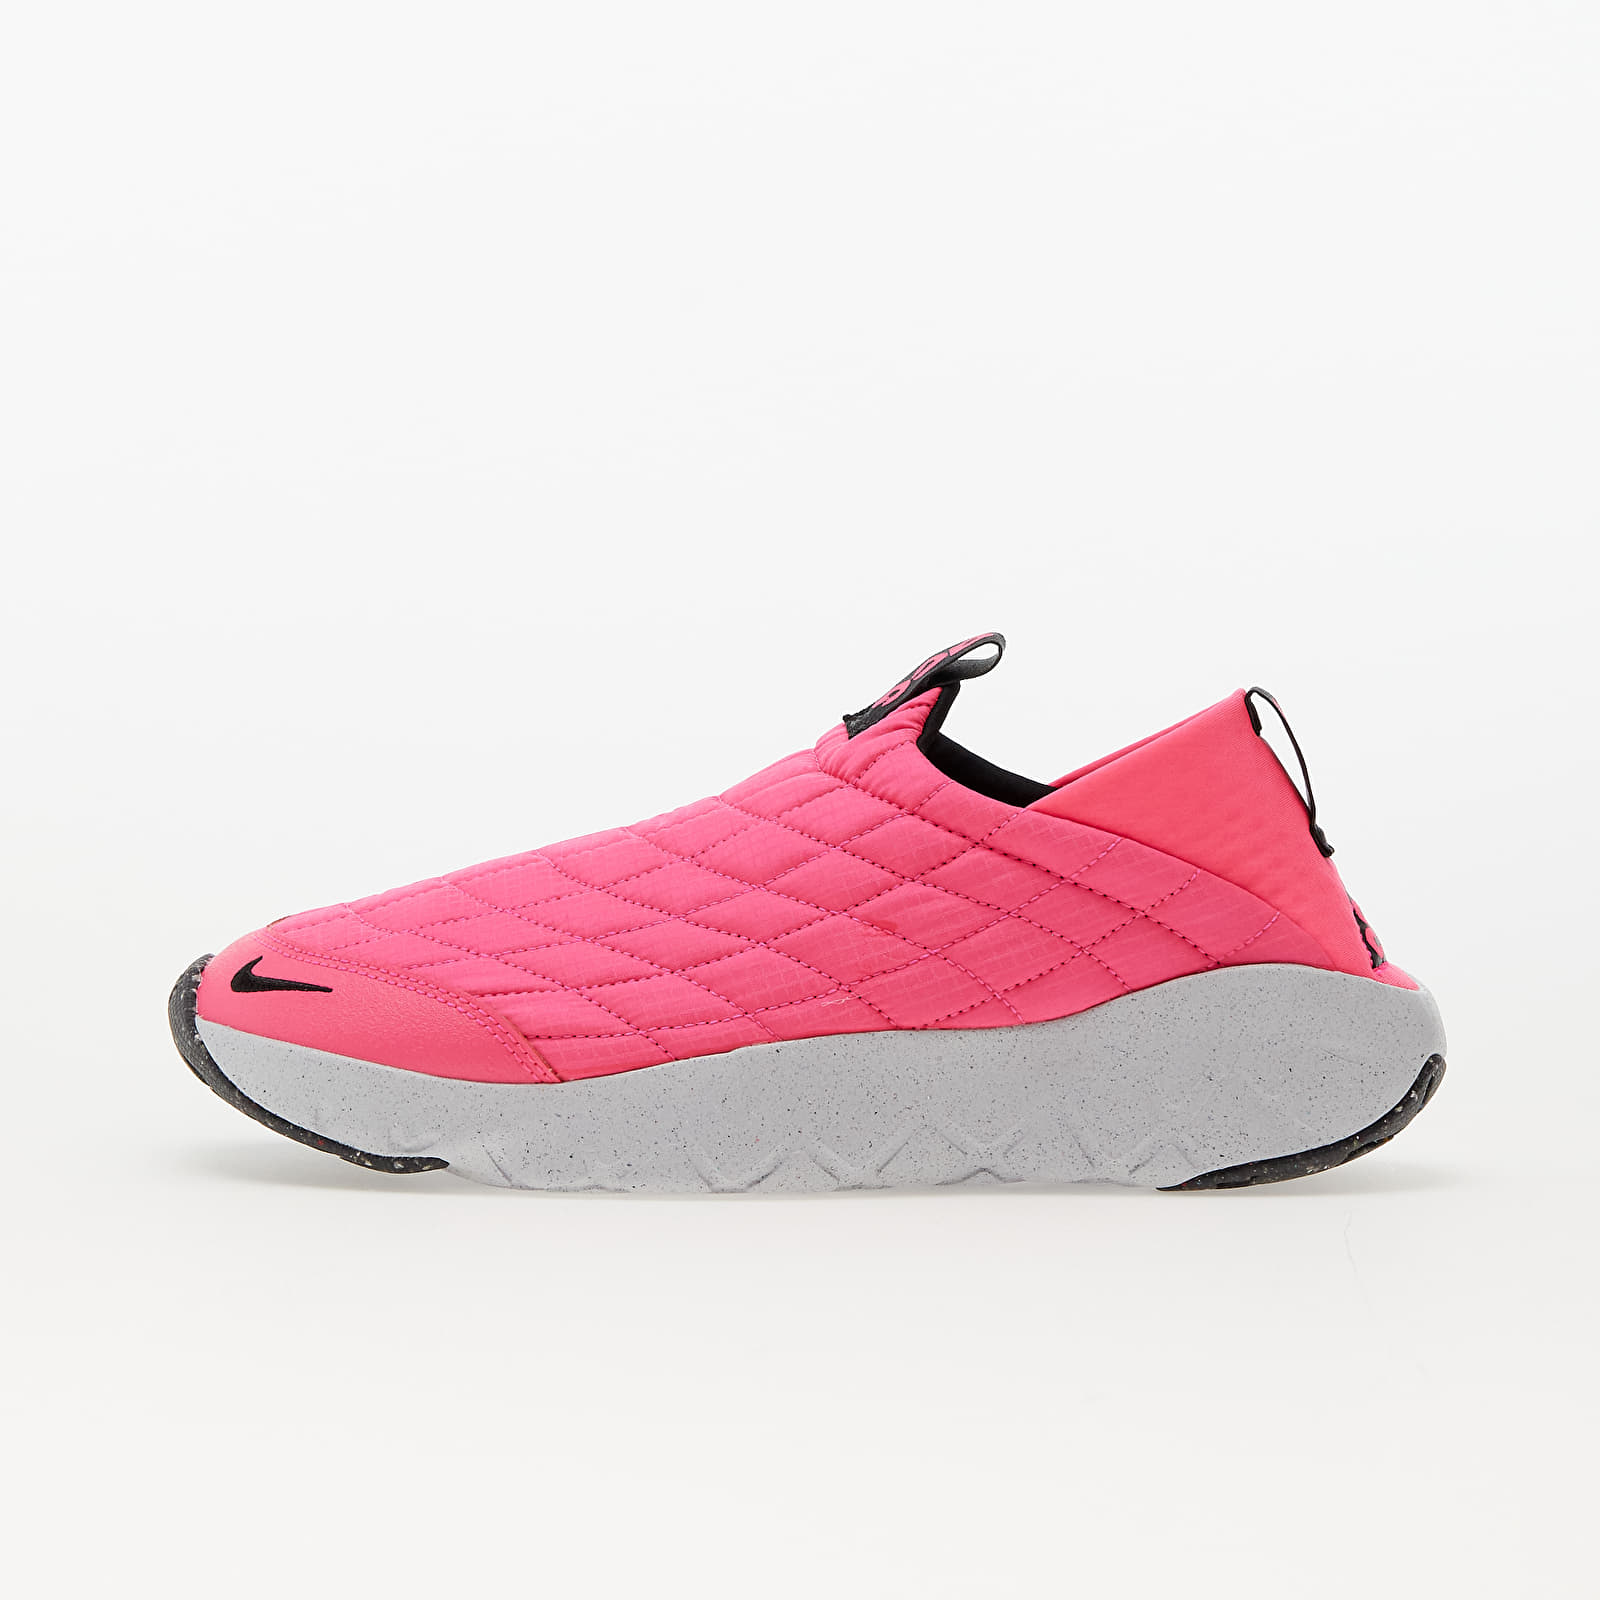 Chaussures et baskets homme Nike ACG Moc 3.5 Hyper Pink/ Hyper Pink-Black-White